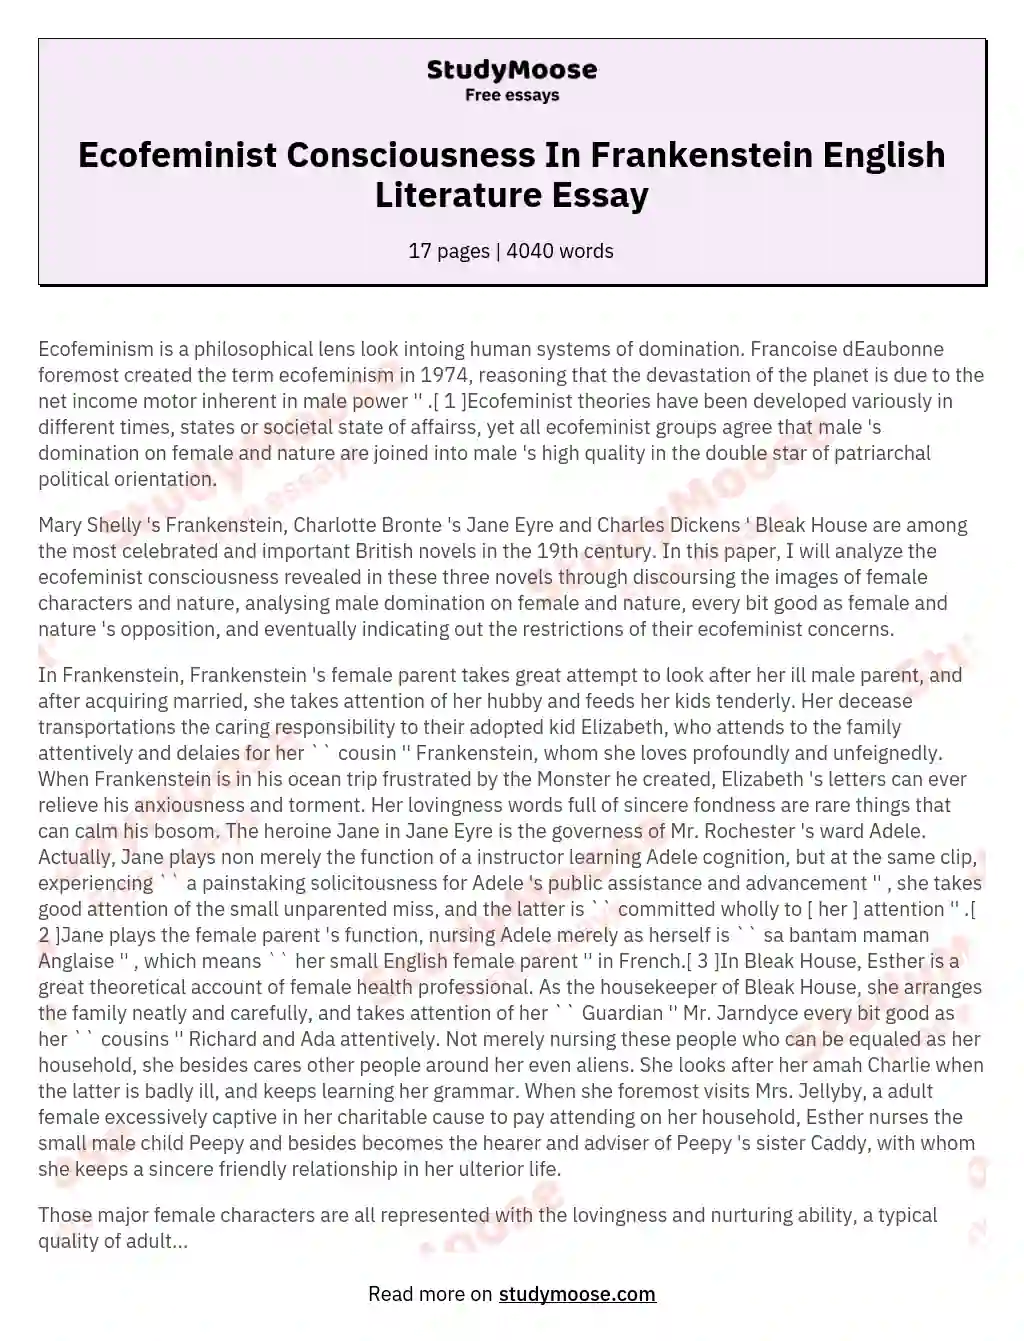 Ecofeminist Consciousness In Frankenstein English Literature Essay essay